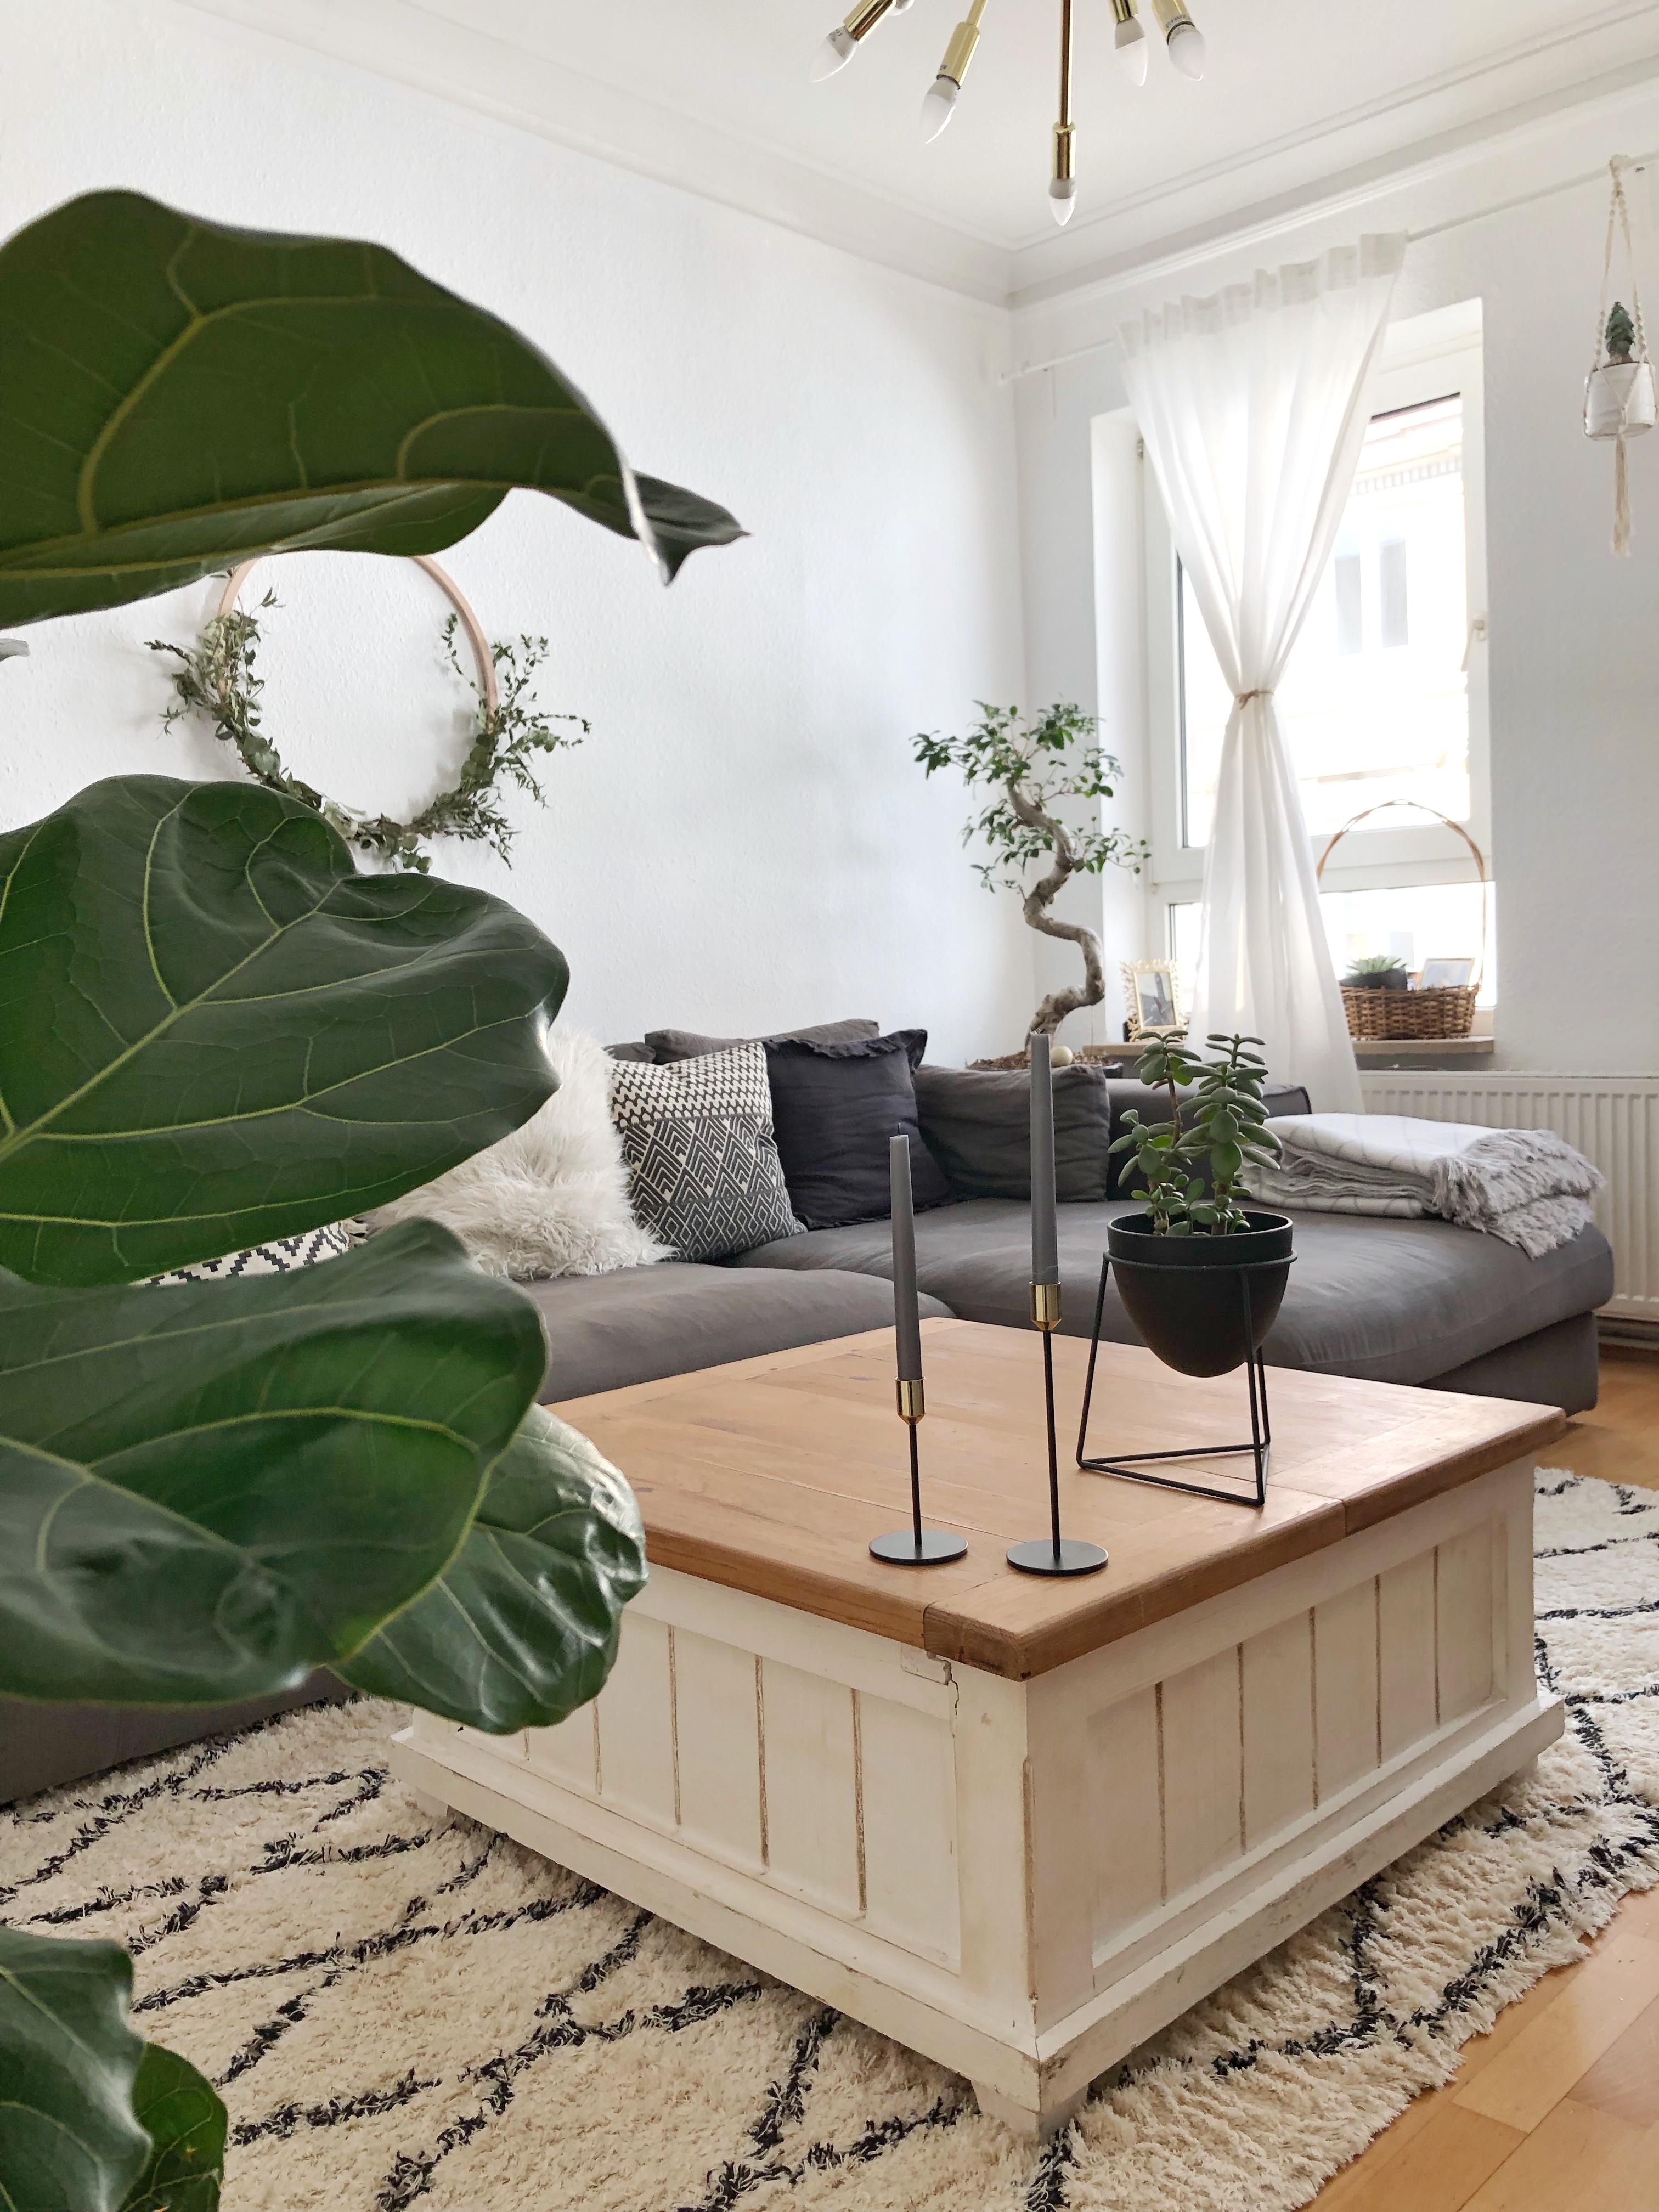 #livingroom #cozy #interiorlove #myhomedecor #scandiboho